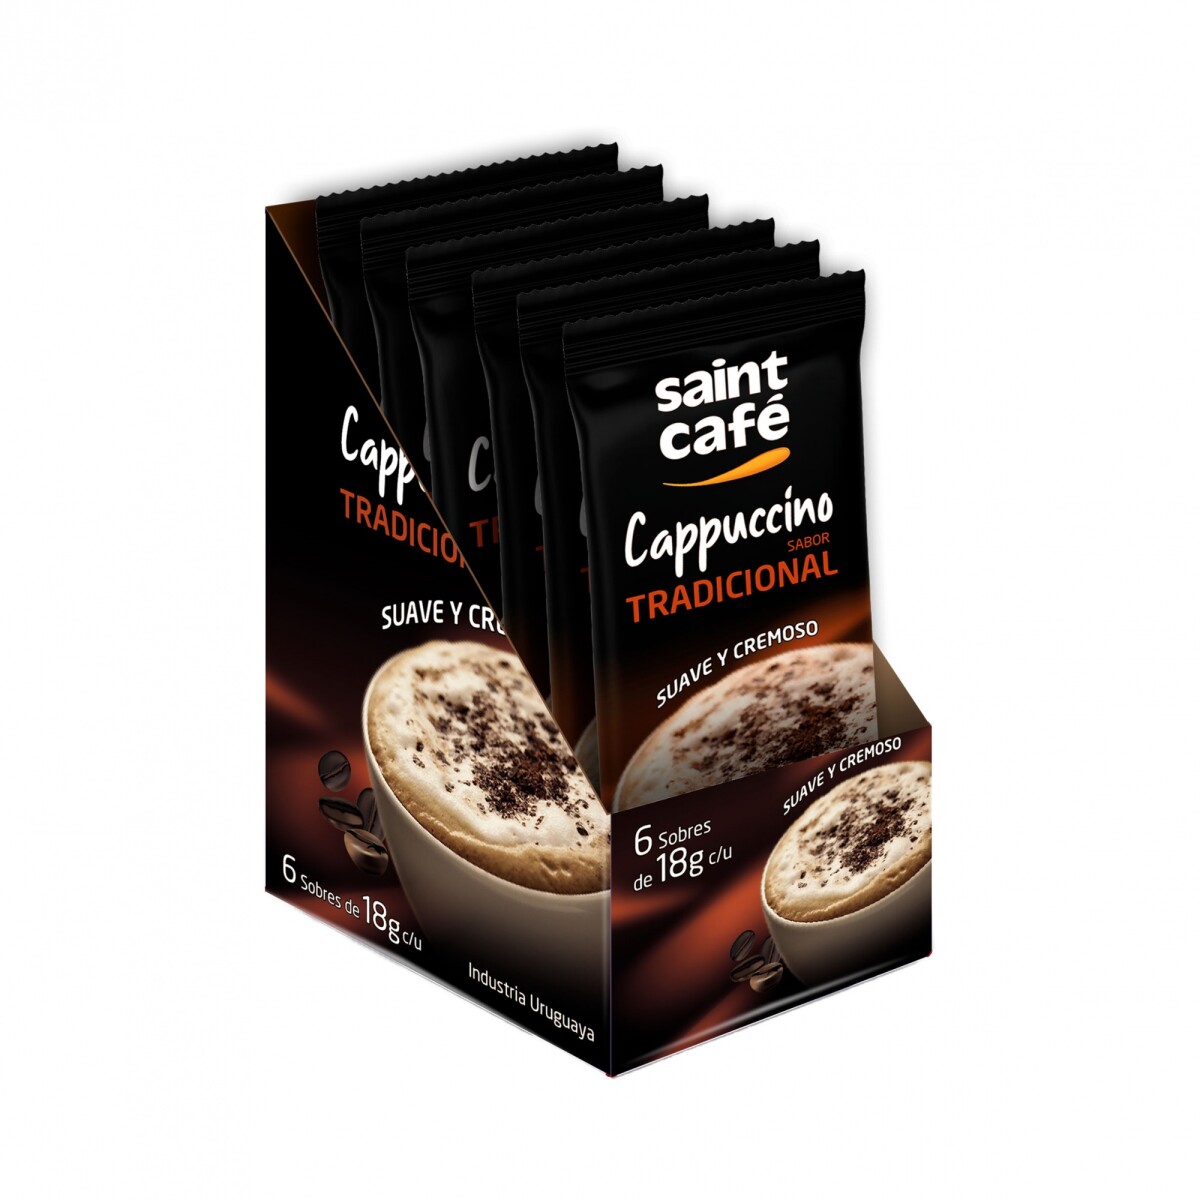 Pack X6 Sticks Saint Café Cappuccino Tradicional - 001 